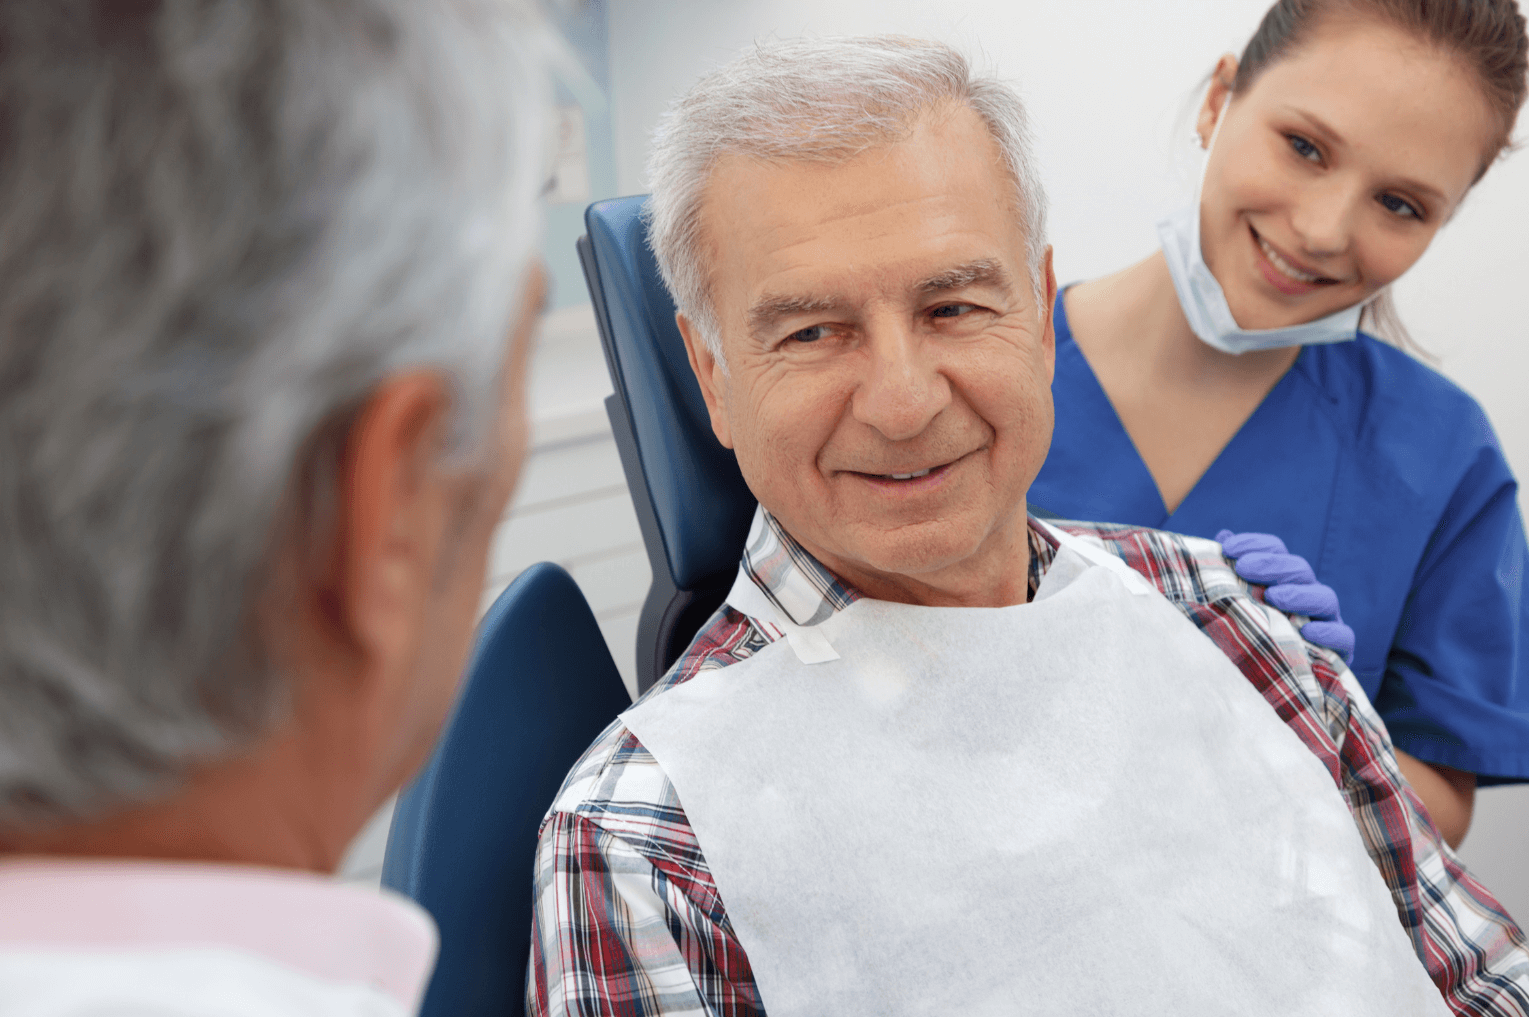 man smiling at dental consultation with nurse behind him